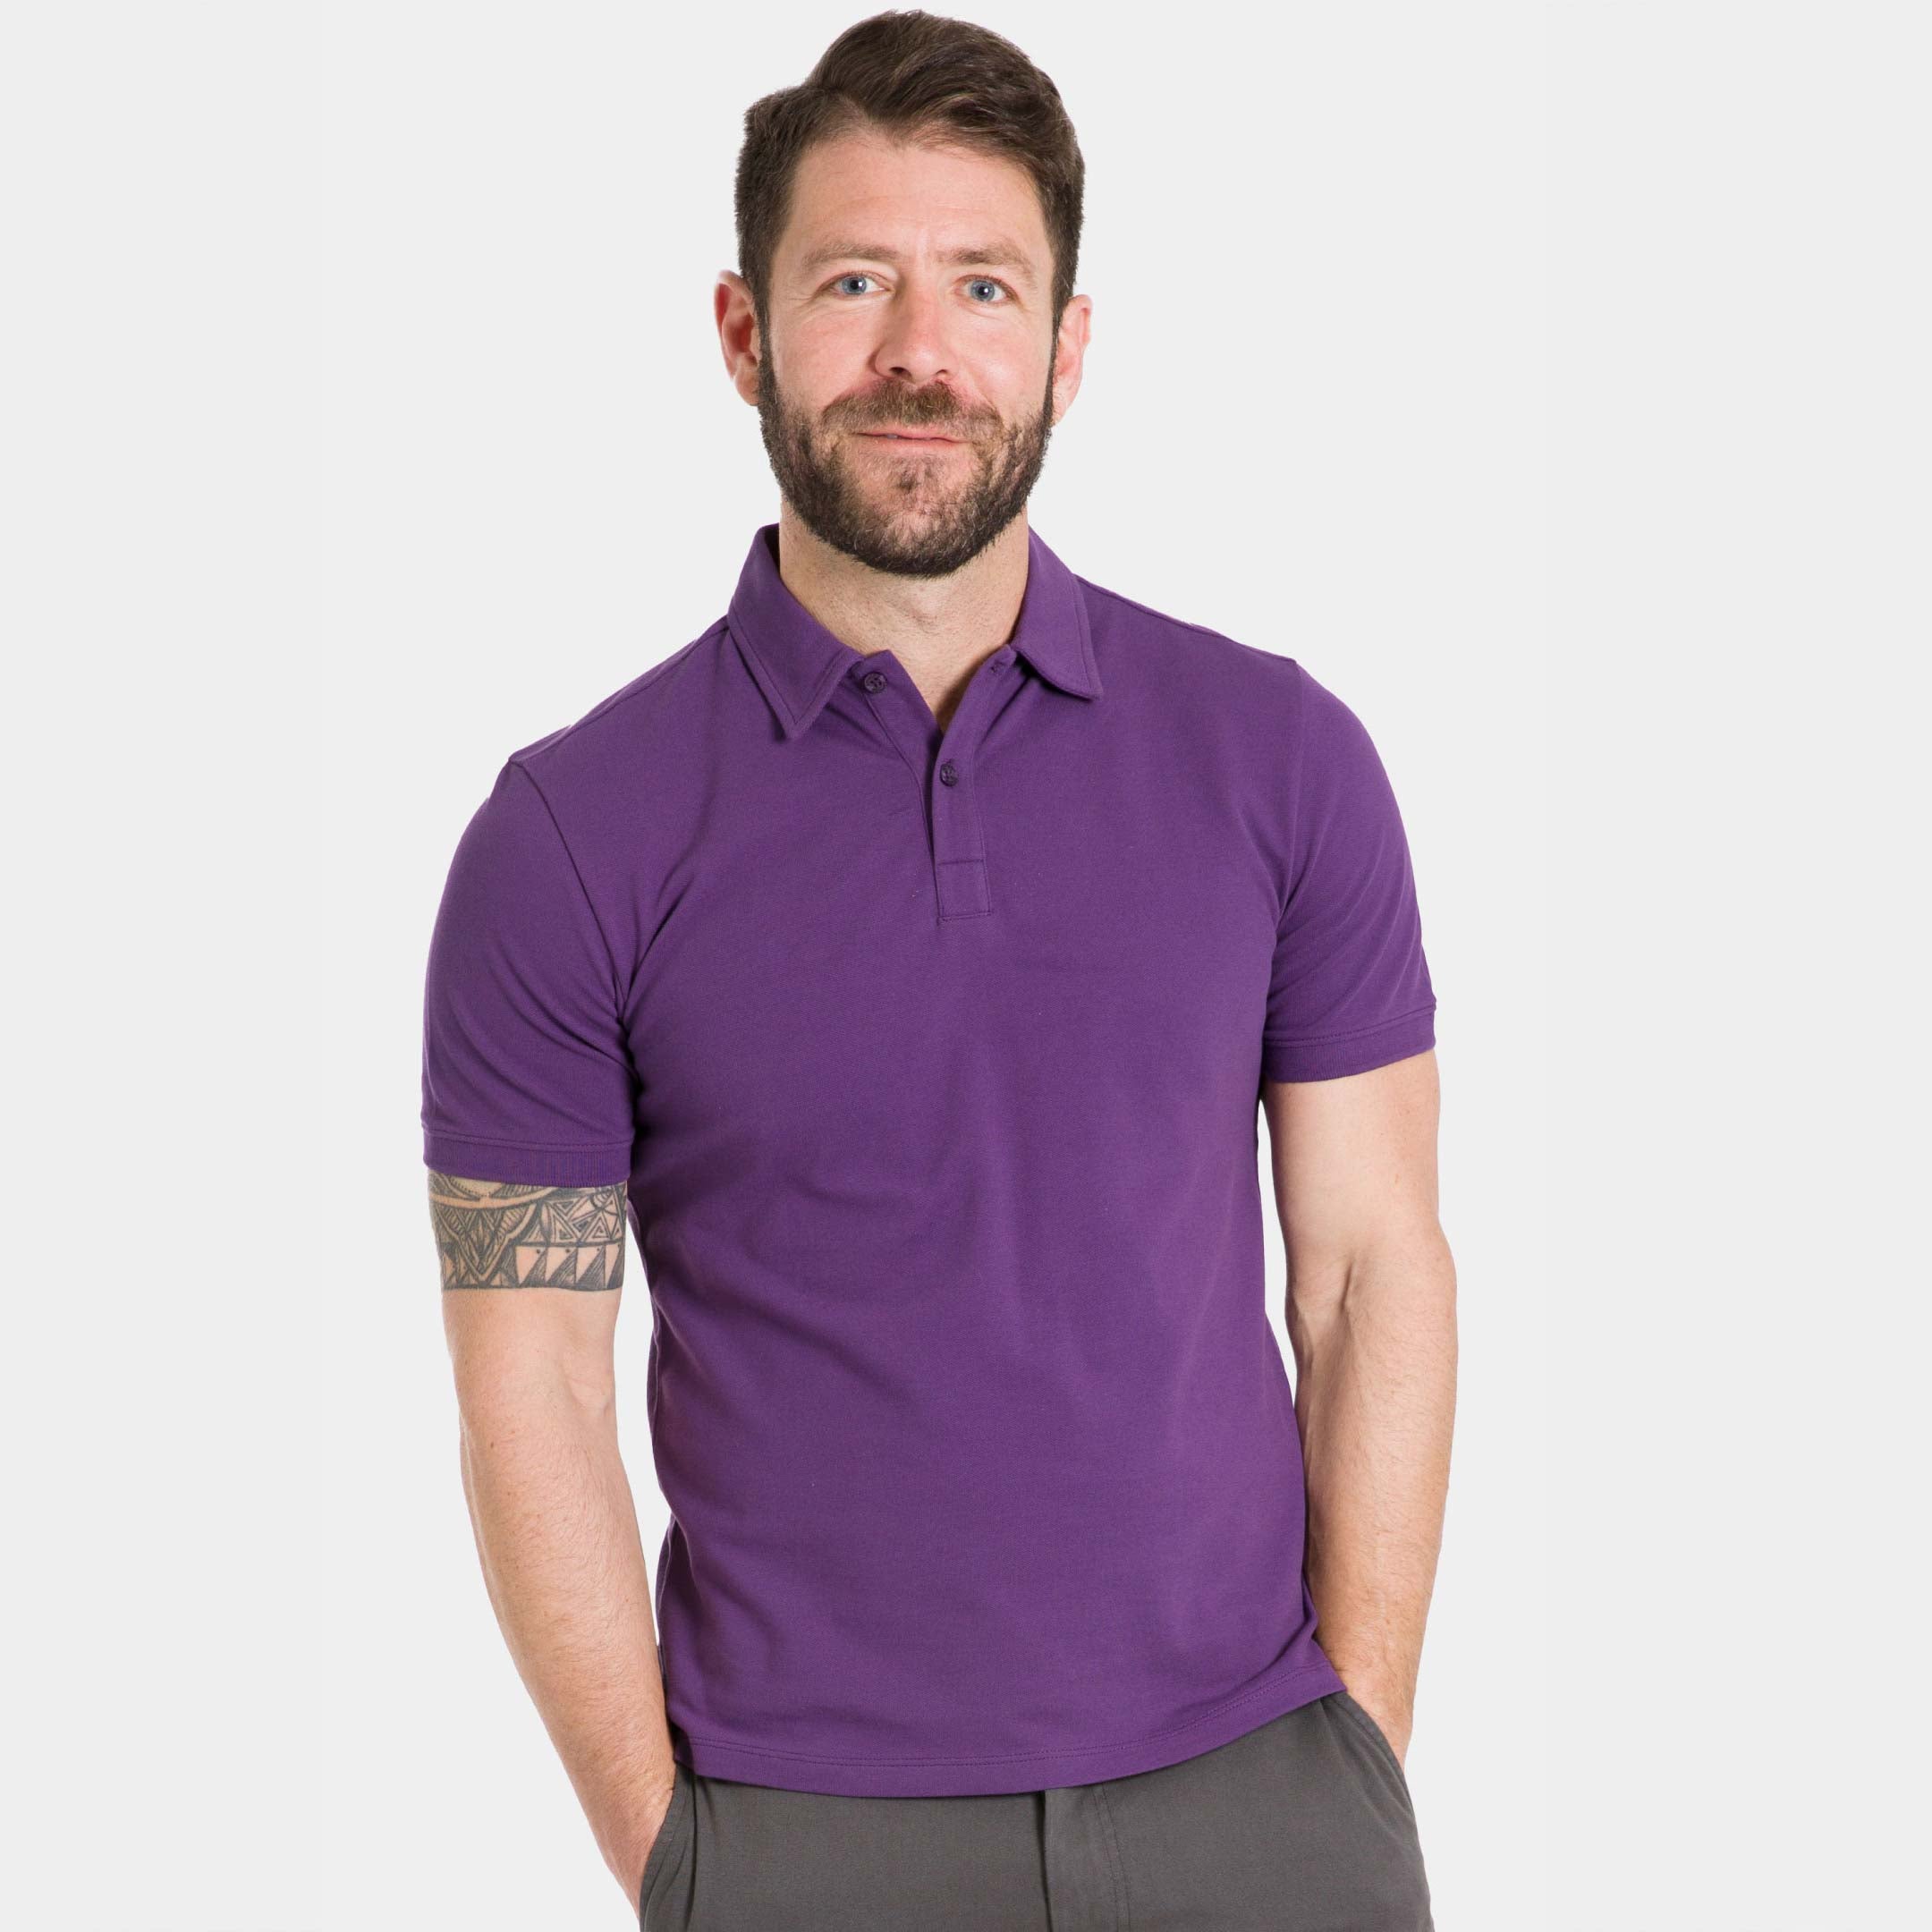 Ash & Erie Purple Pique Polo Shirt for Short Men